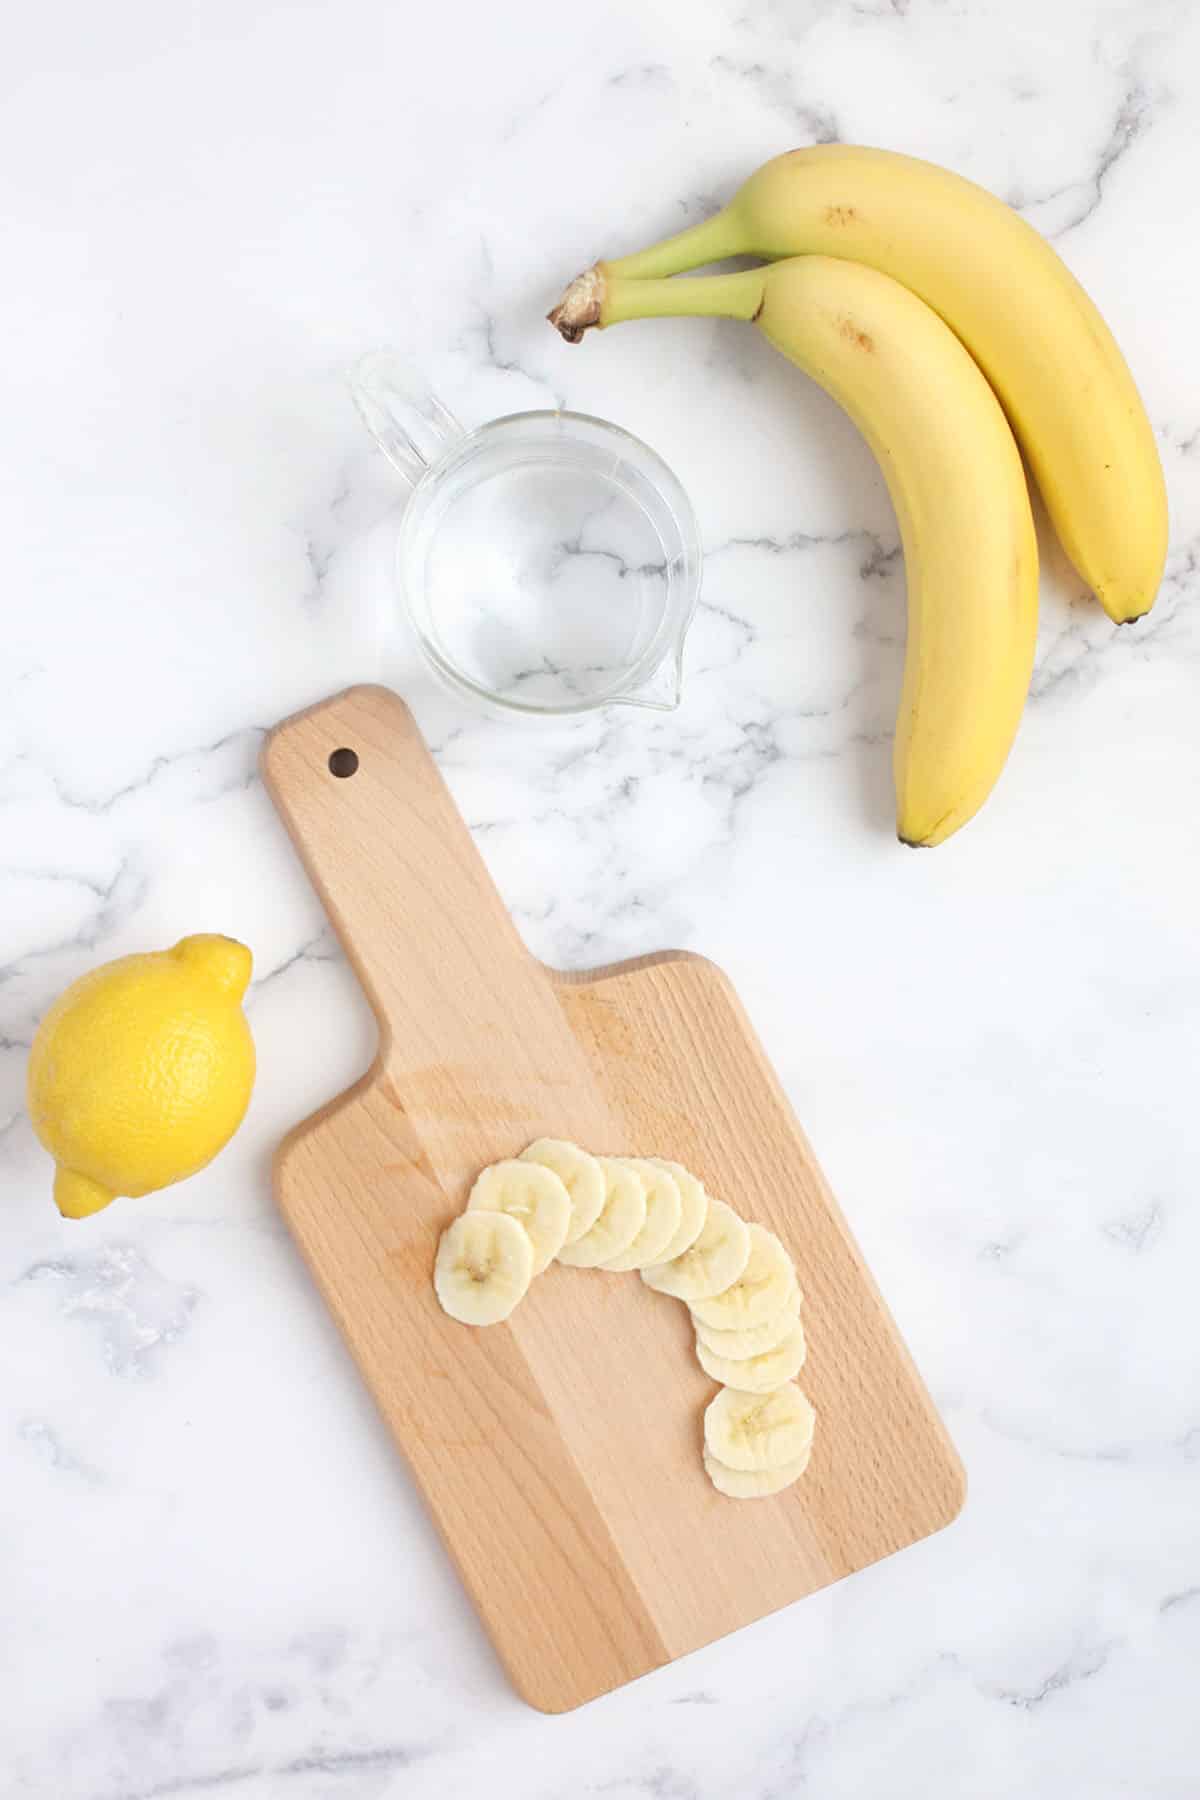 Ingredients for Homemade Banana Chips: Fresh Bananas, Water, Lemon Juice